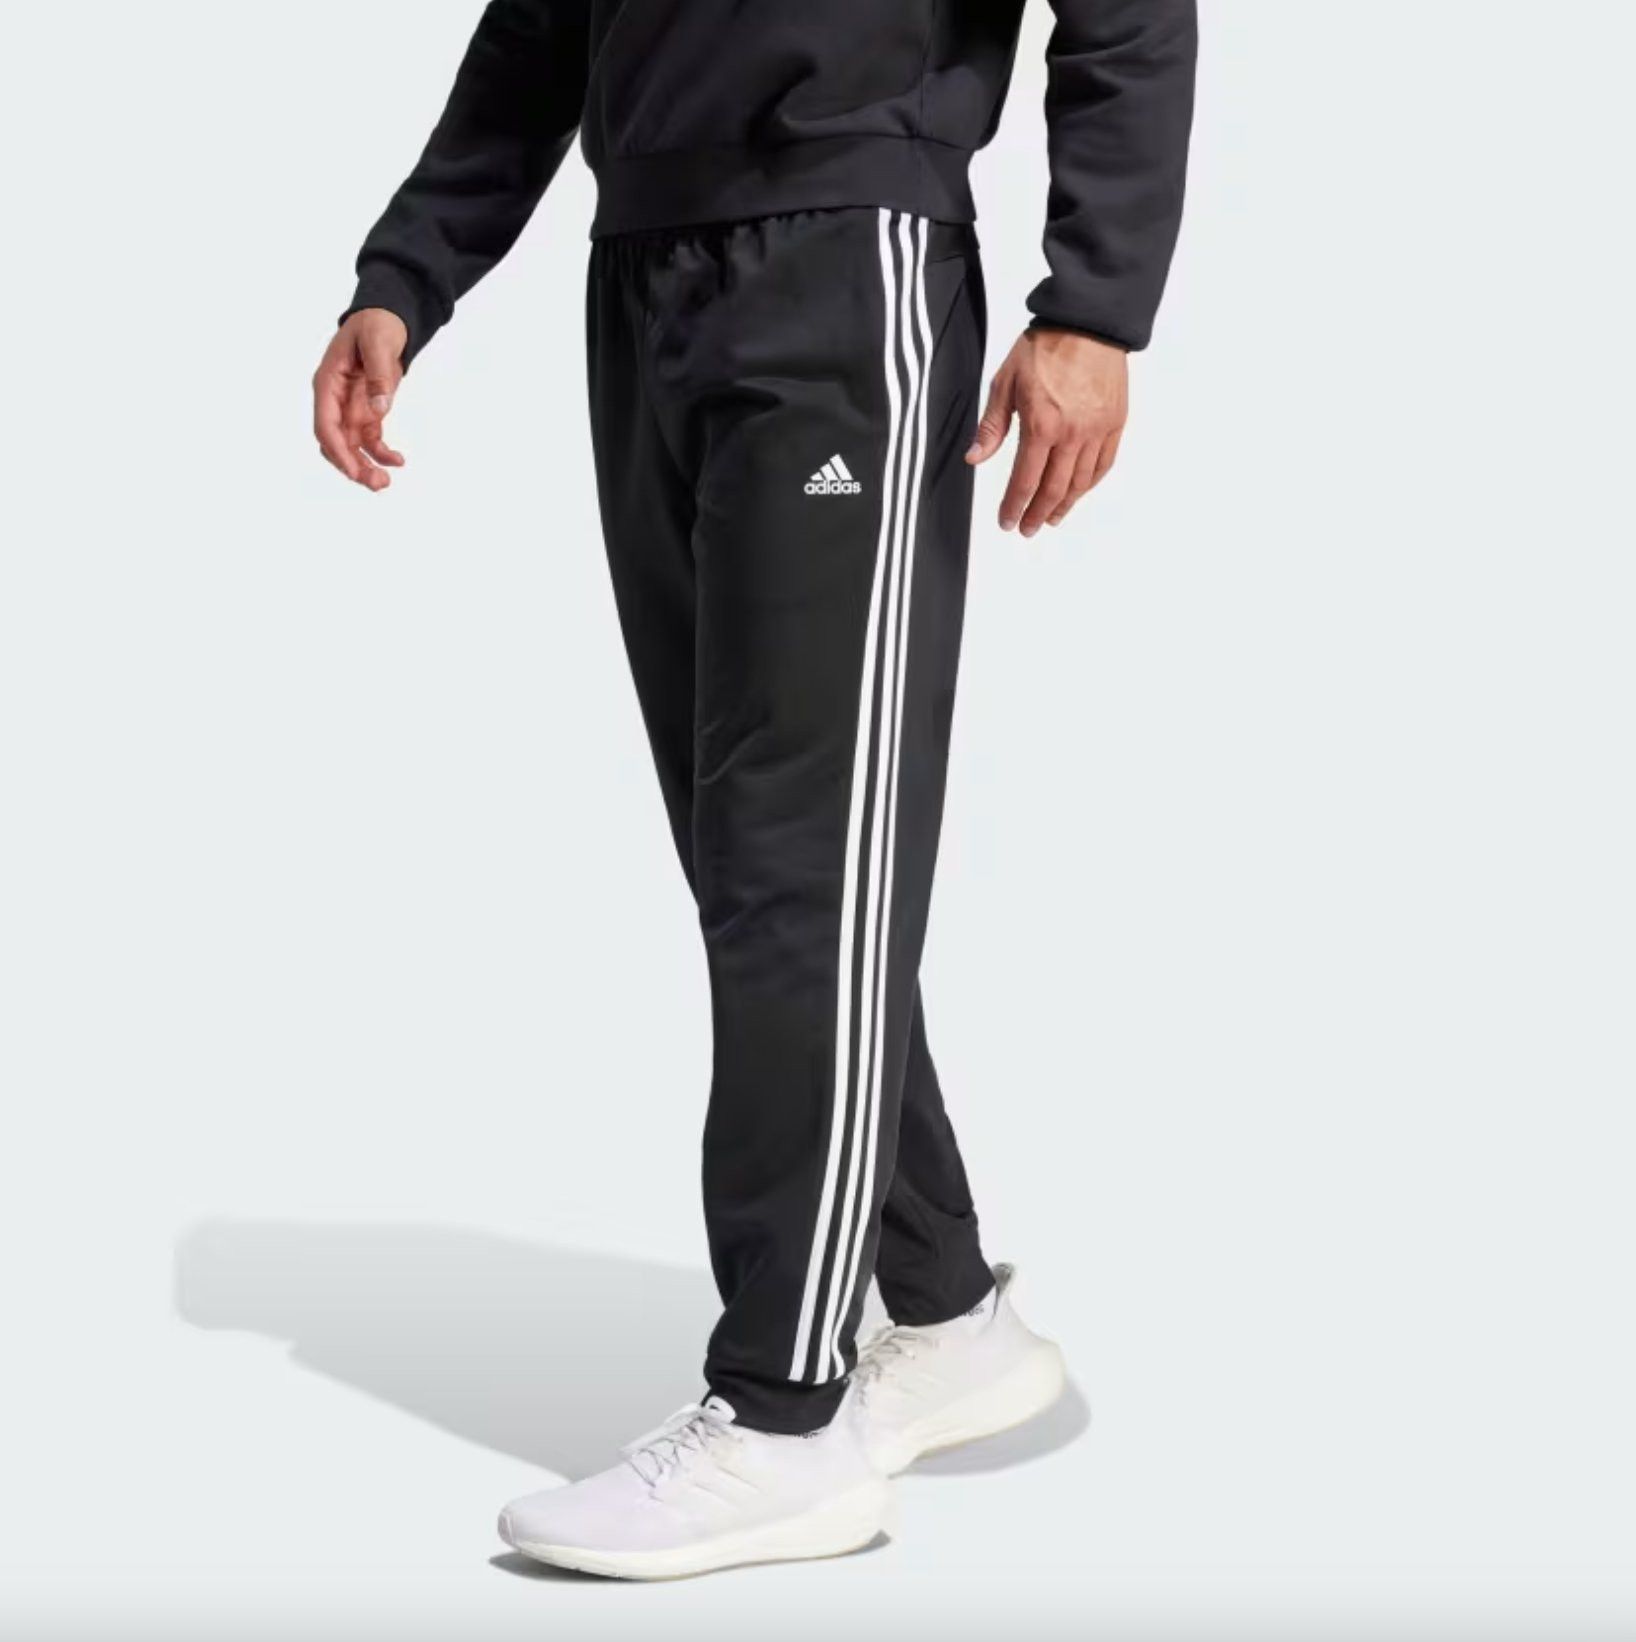 Adidas Vintage basketball warm up pants snap on striped